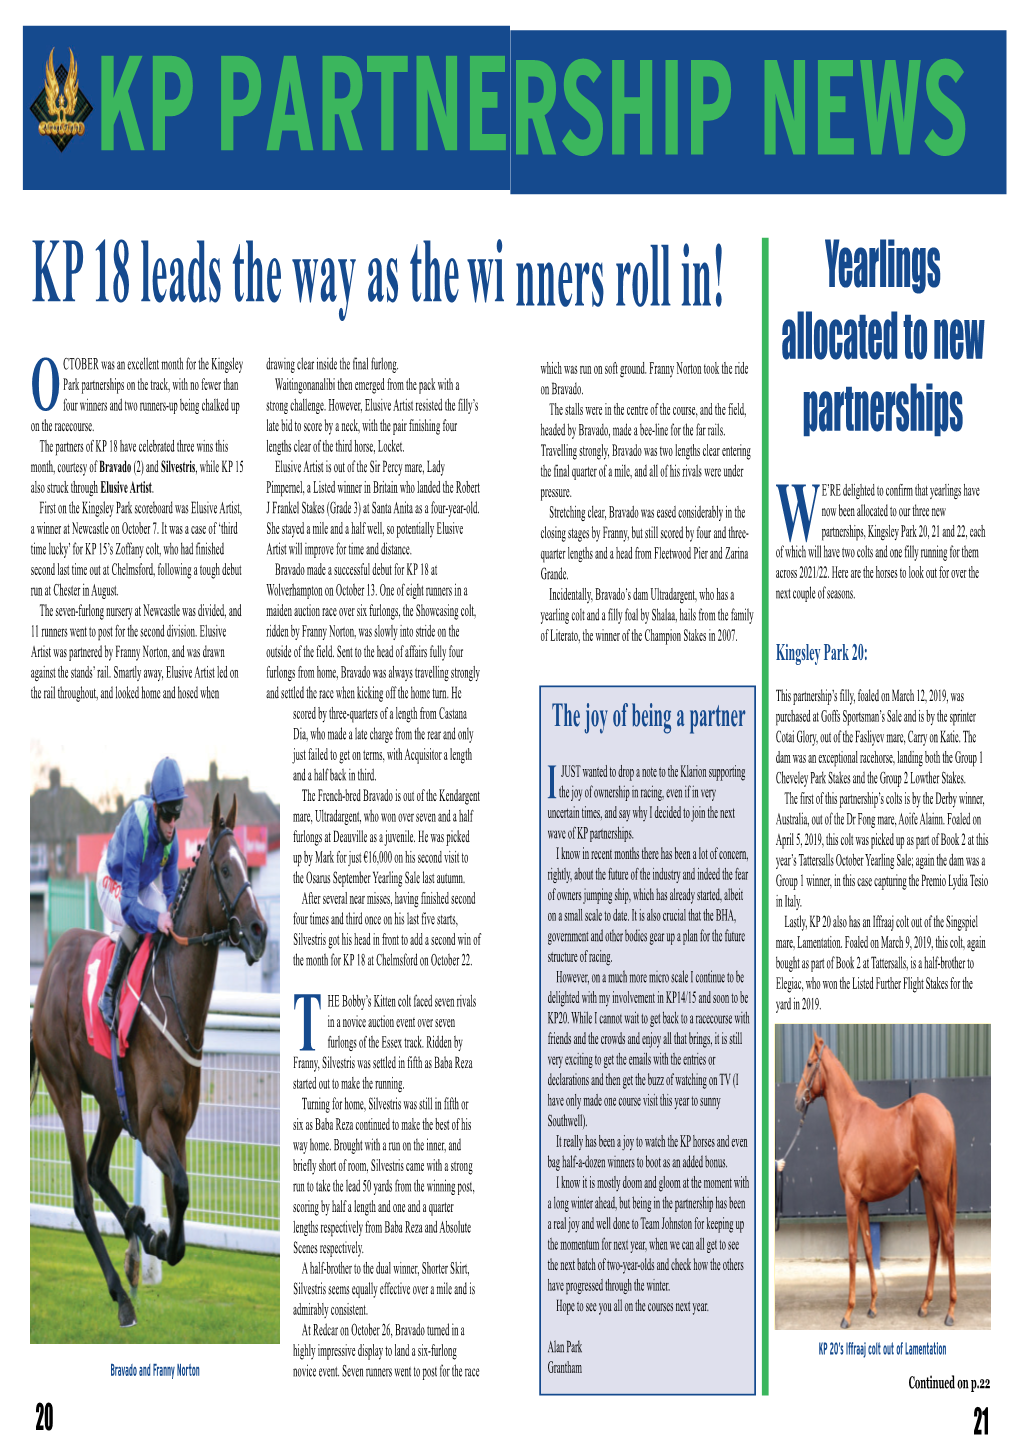 KP Partnerships News